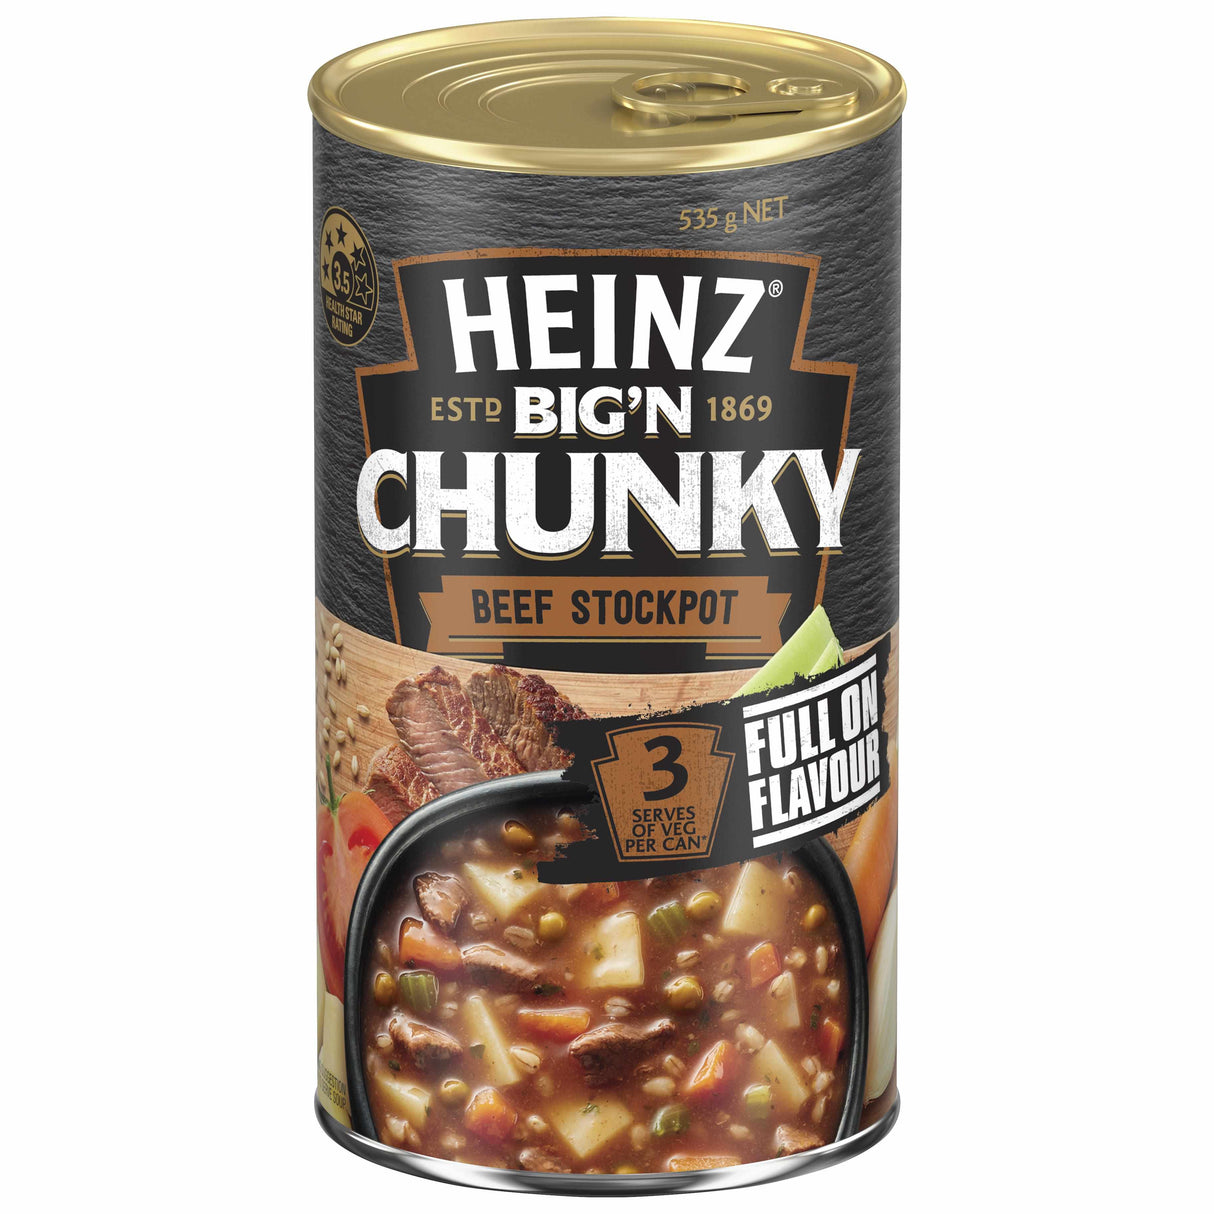 Heinz Big'N Chunky Beef Stockpot Soup 535g